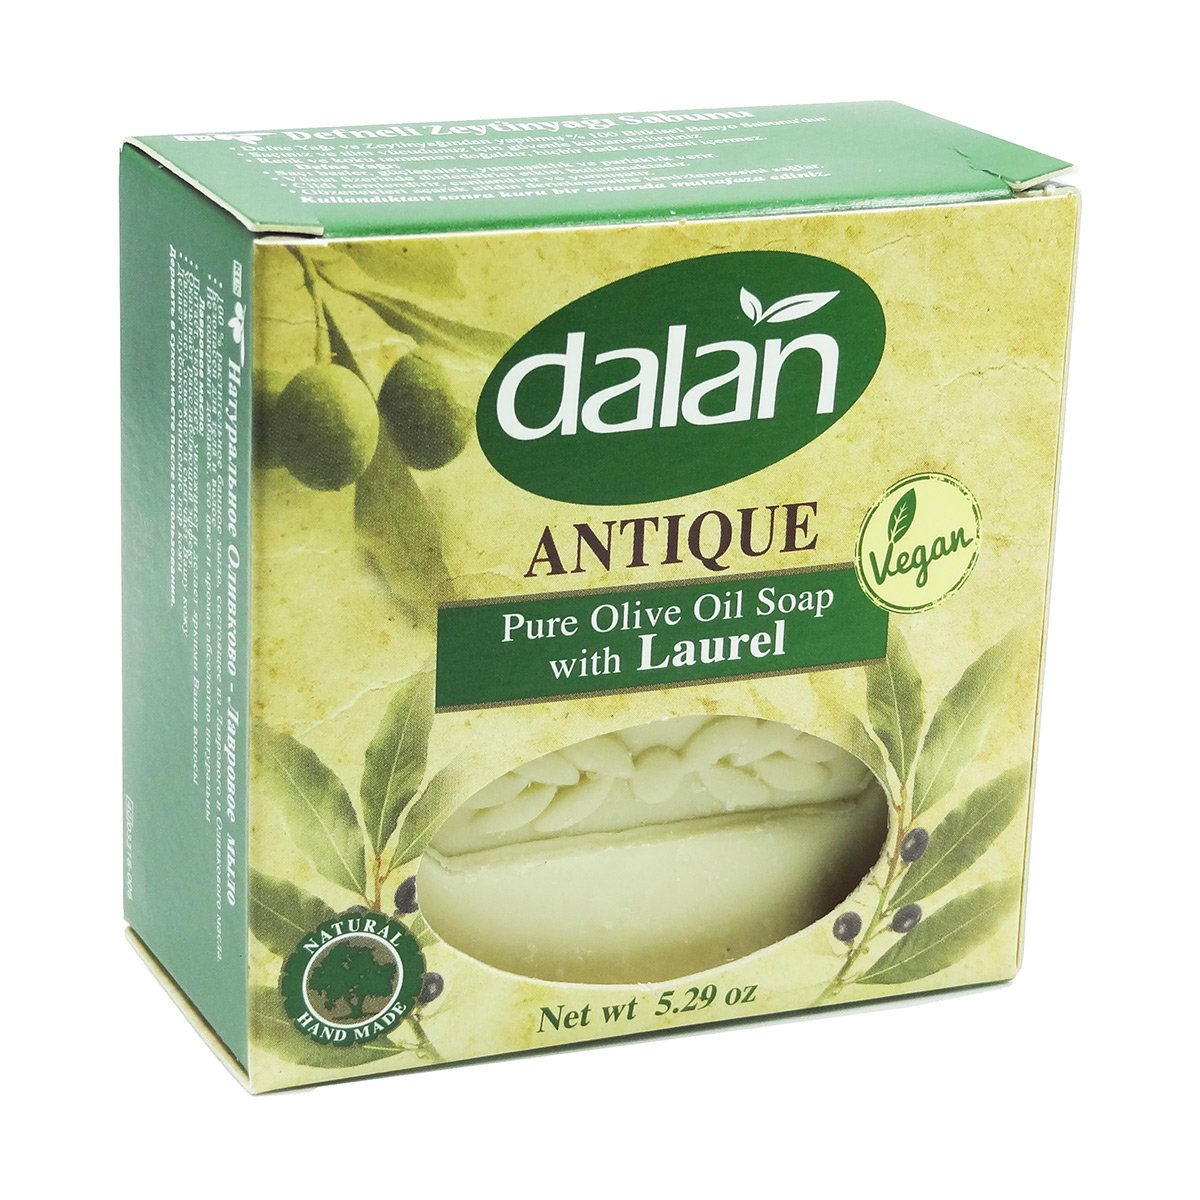 Dalan Antique Pure Olive Oil Soap With Laurel 150g Morganics Beauty